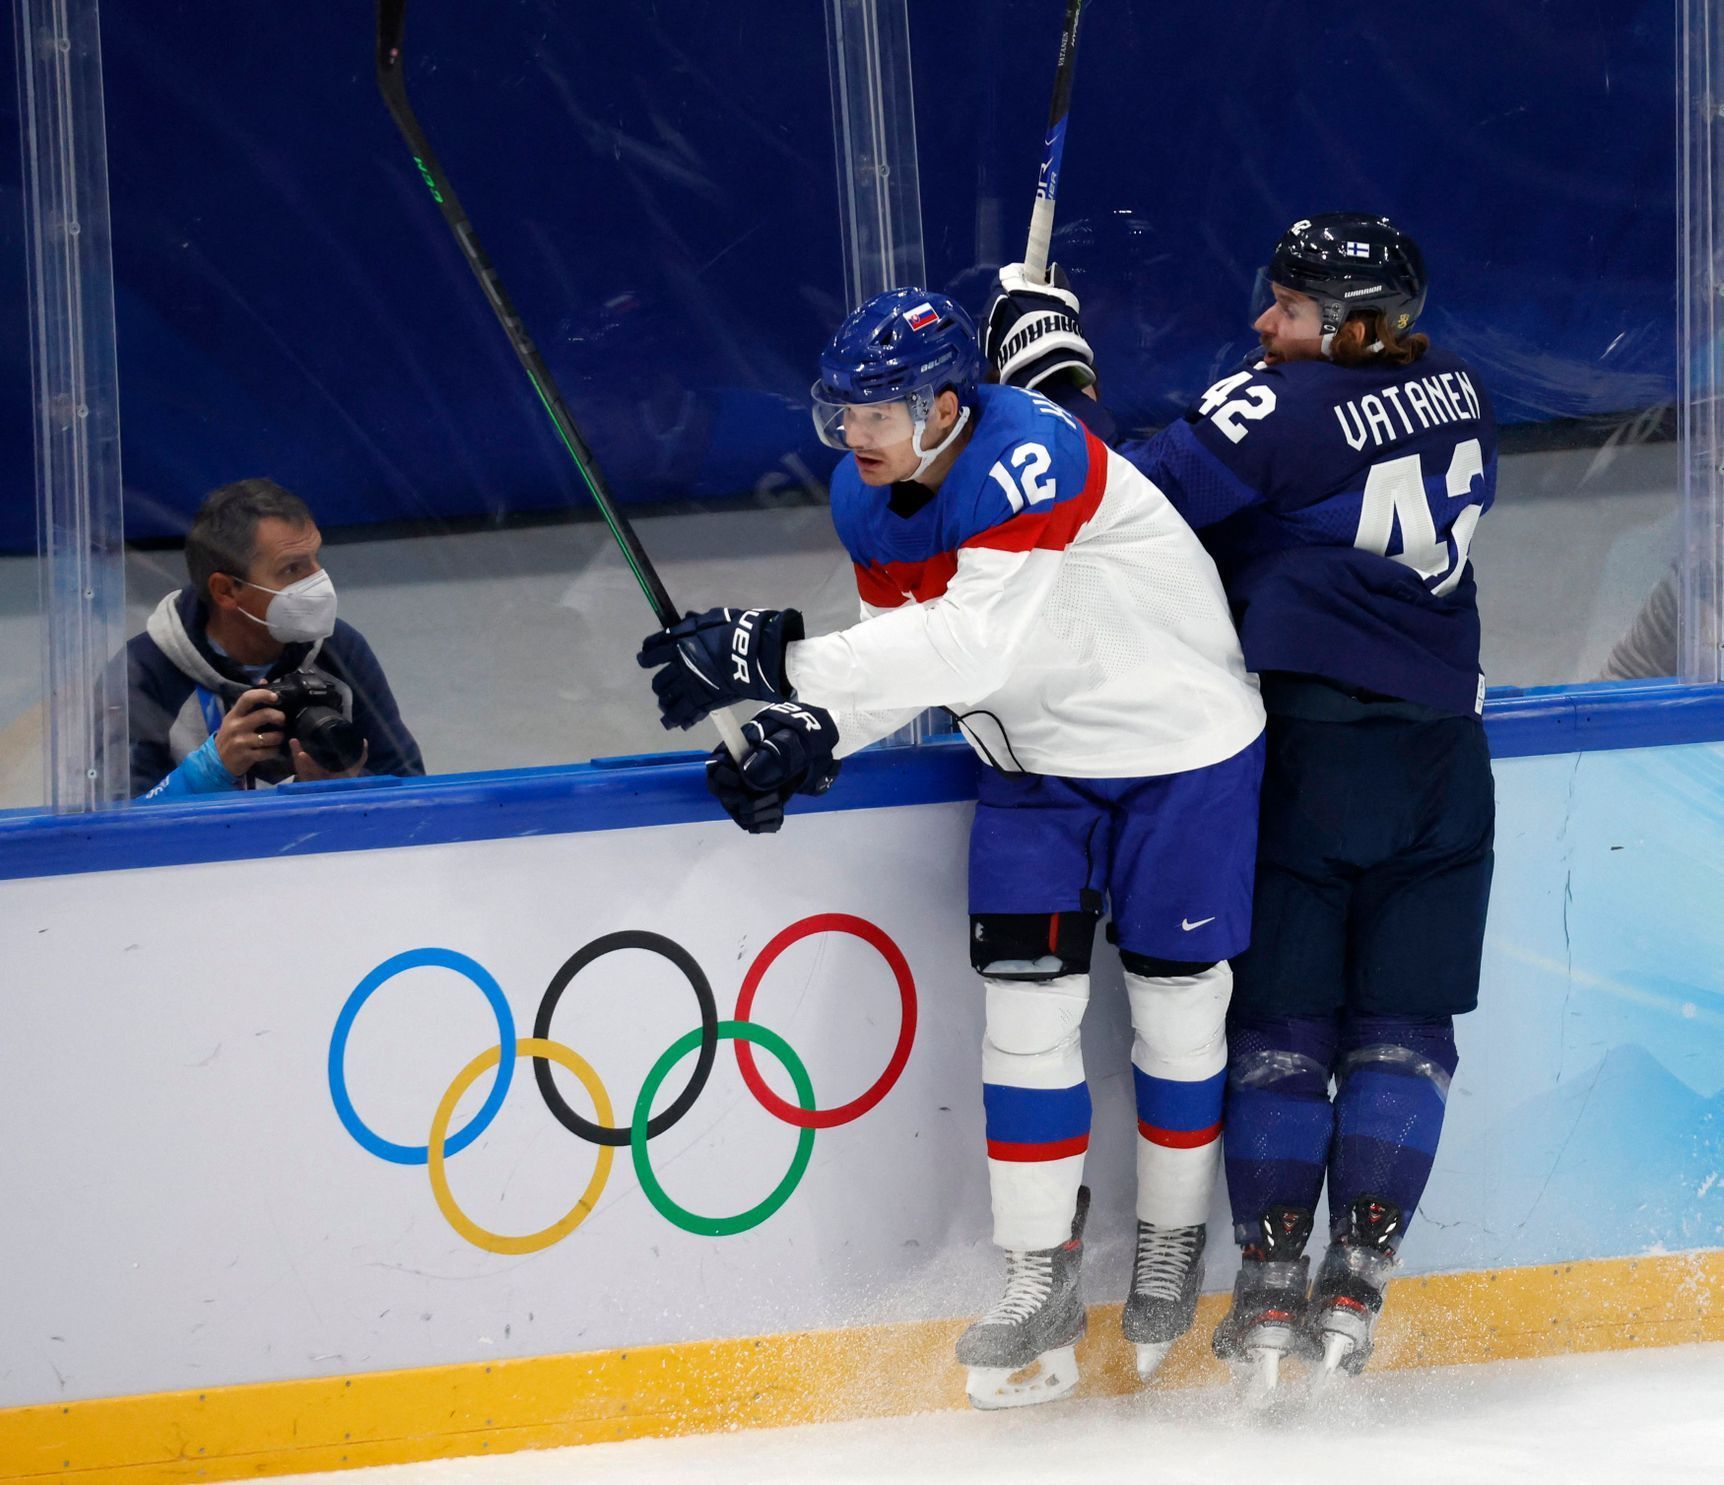 Miloš Kelemen a Sami Vatanen v semifinále Slovensko - Finsko na ZOH 2022 v Pekingu